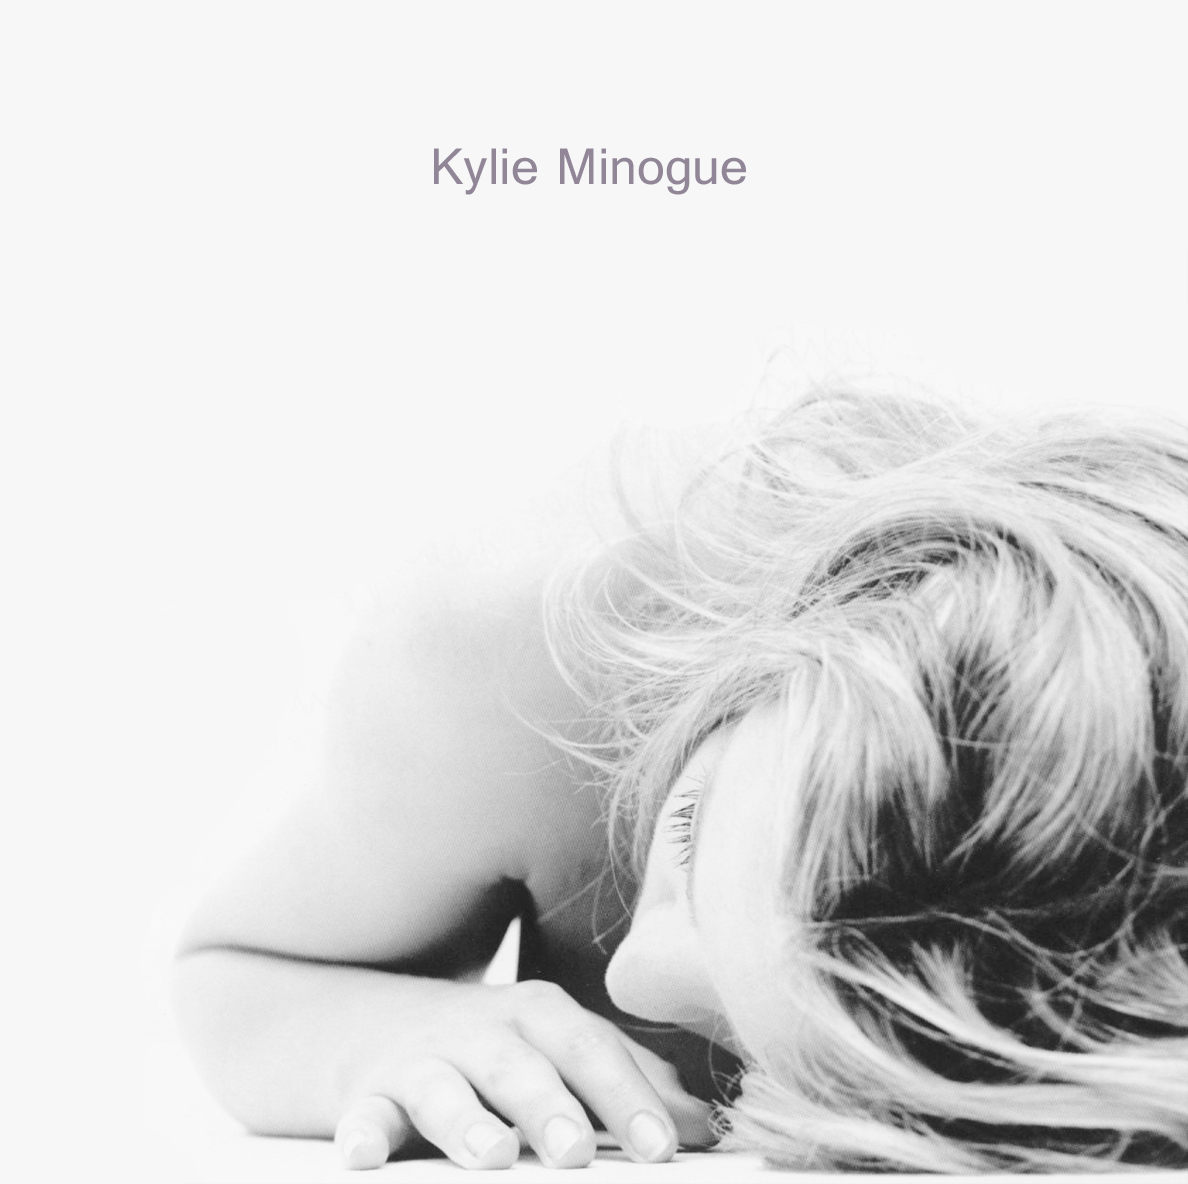 002_Kylie_Minogue_CAN.jpg